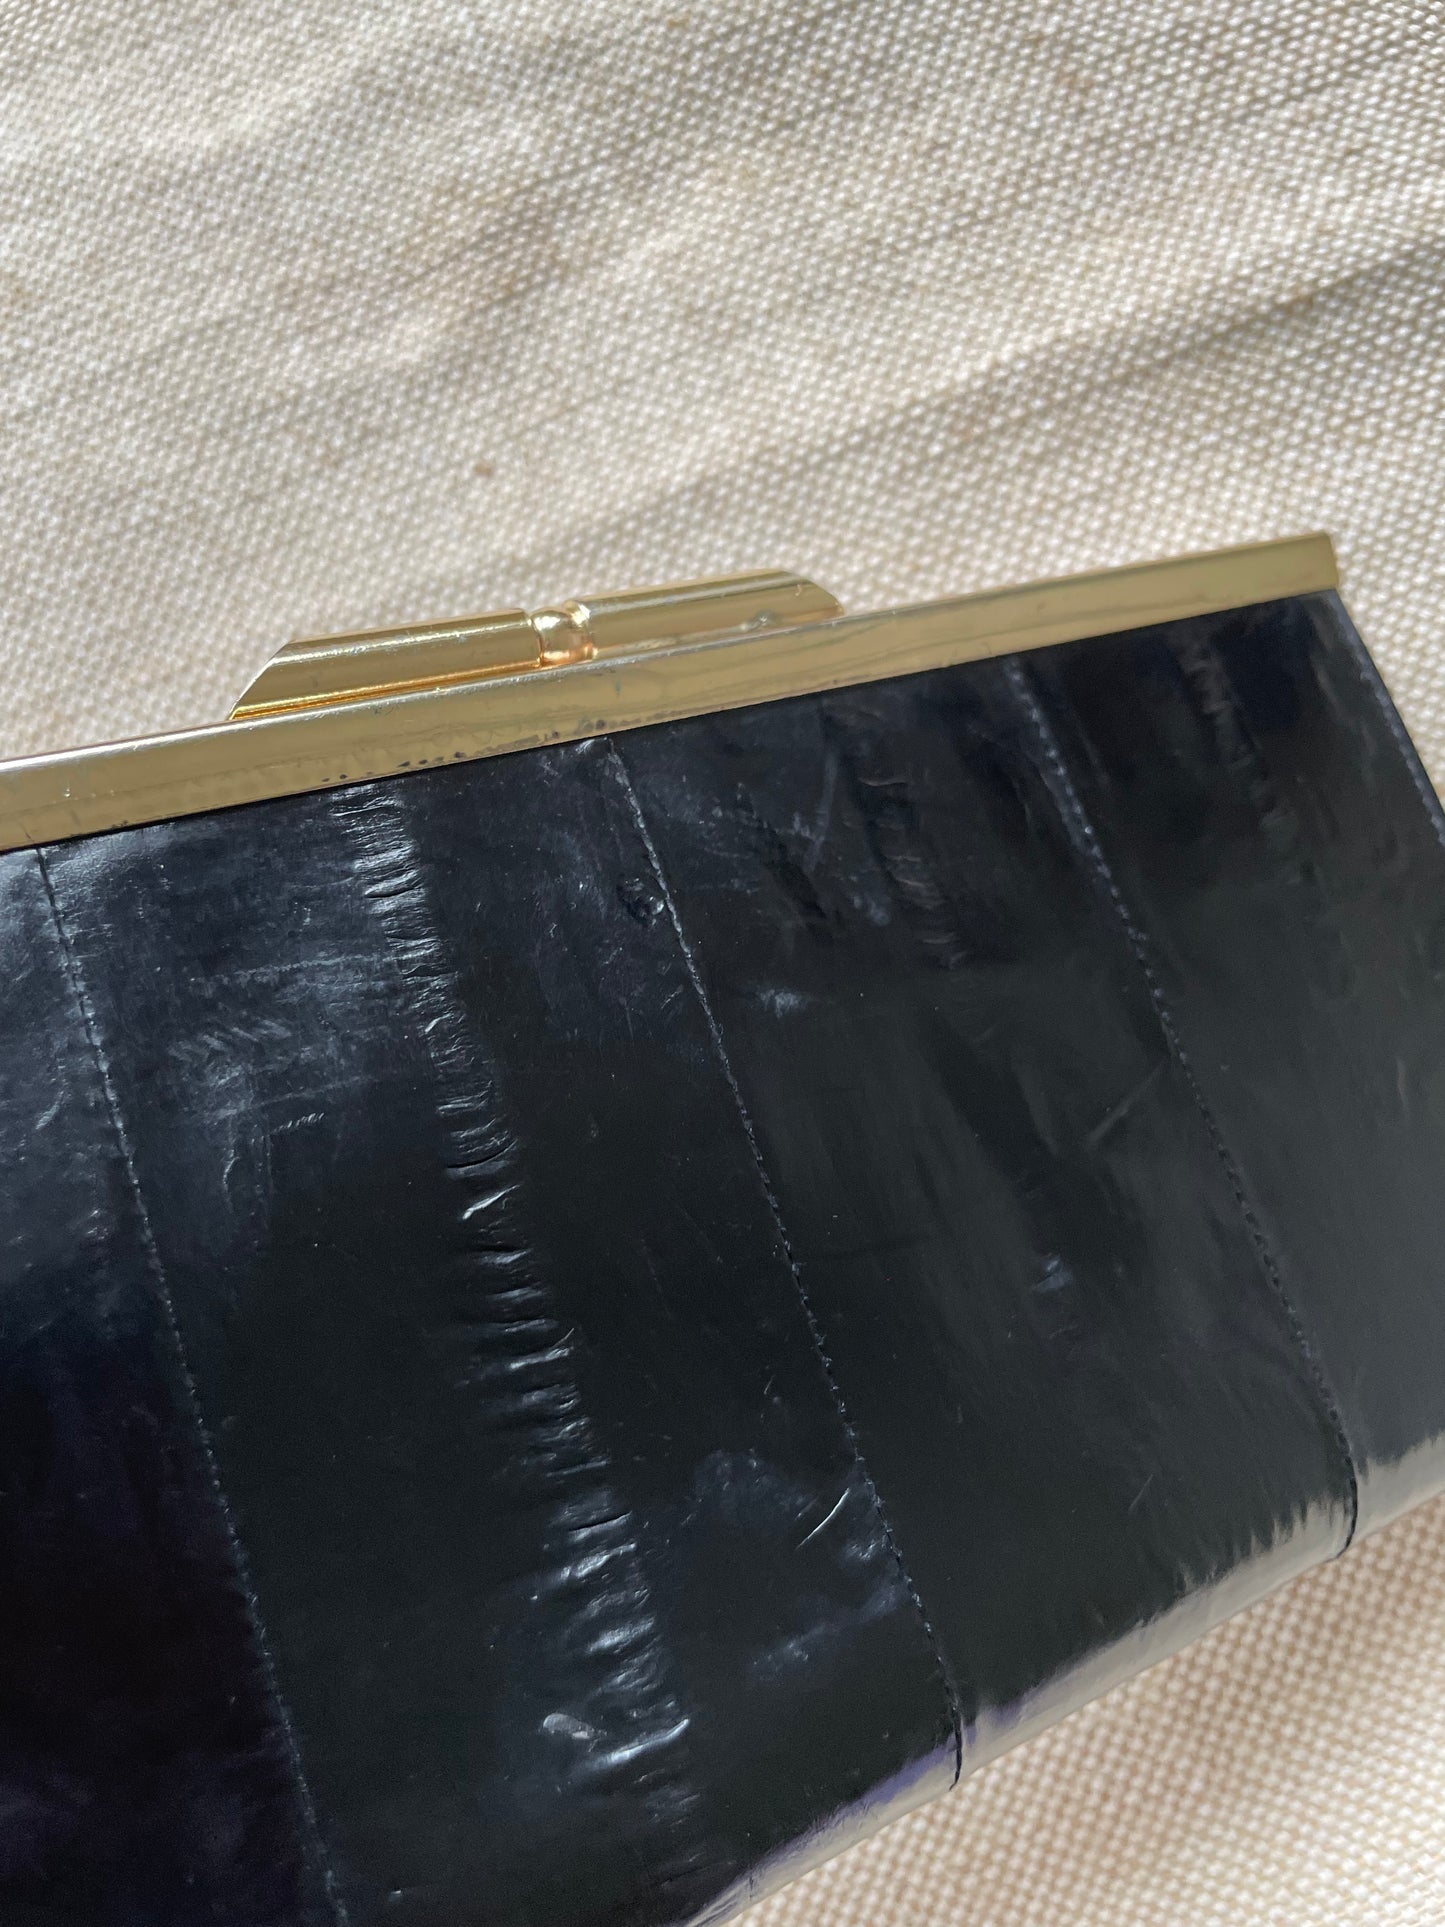 Vintage 80s Black Eel Leather Wallet with a Unique Gold Clasp